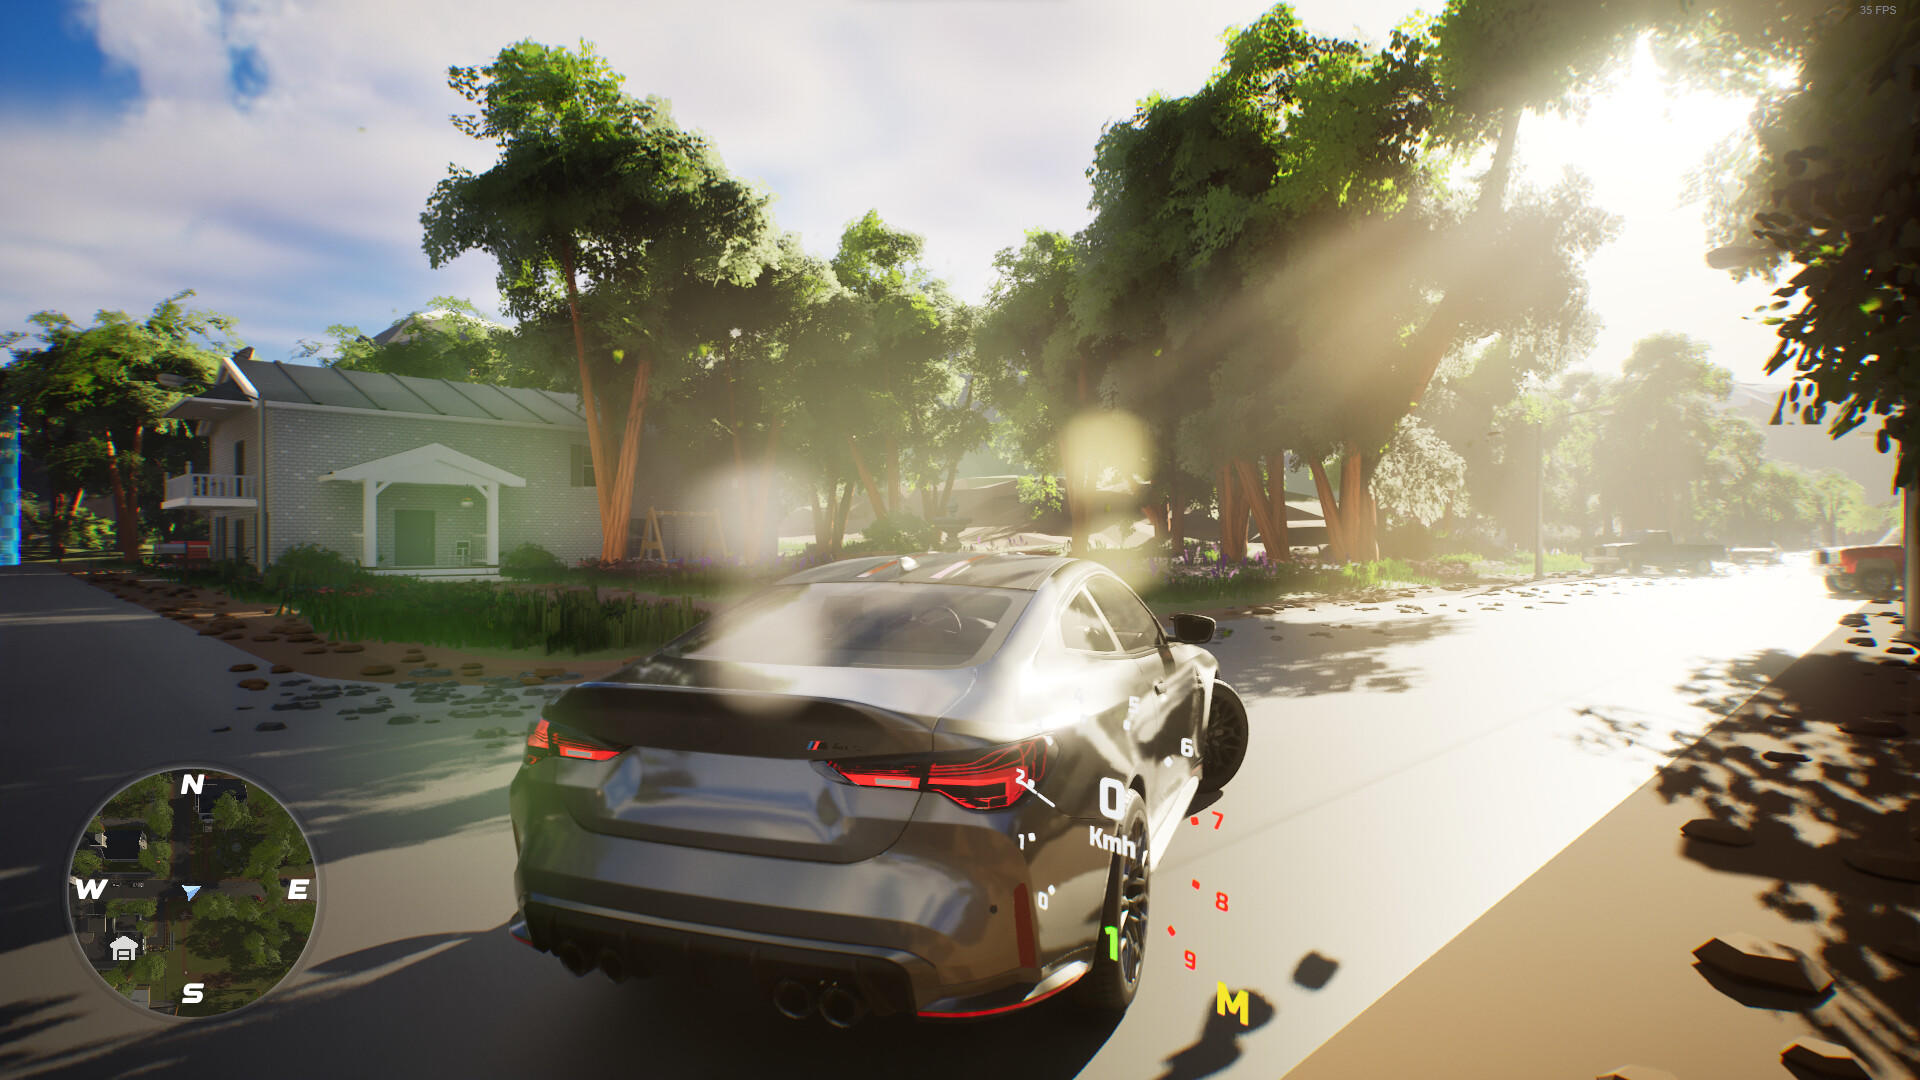 Quantum Drive screenshot game